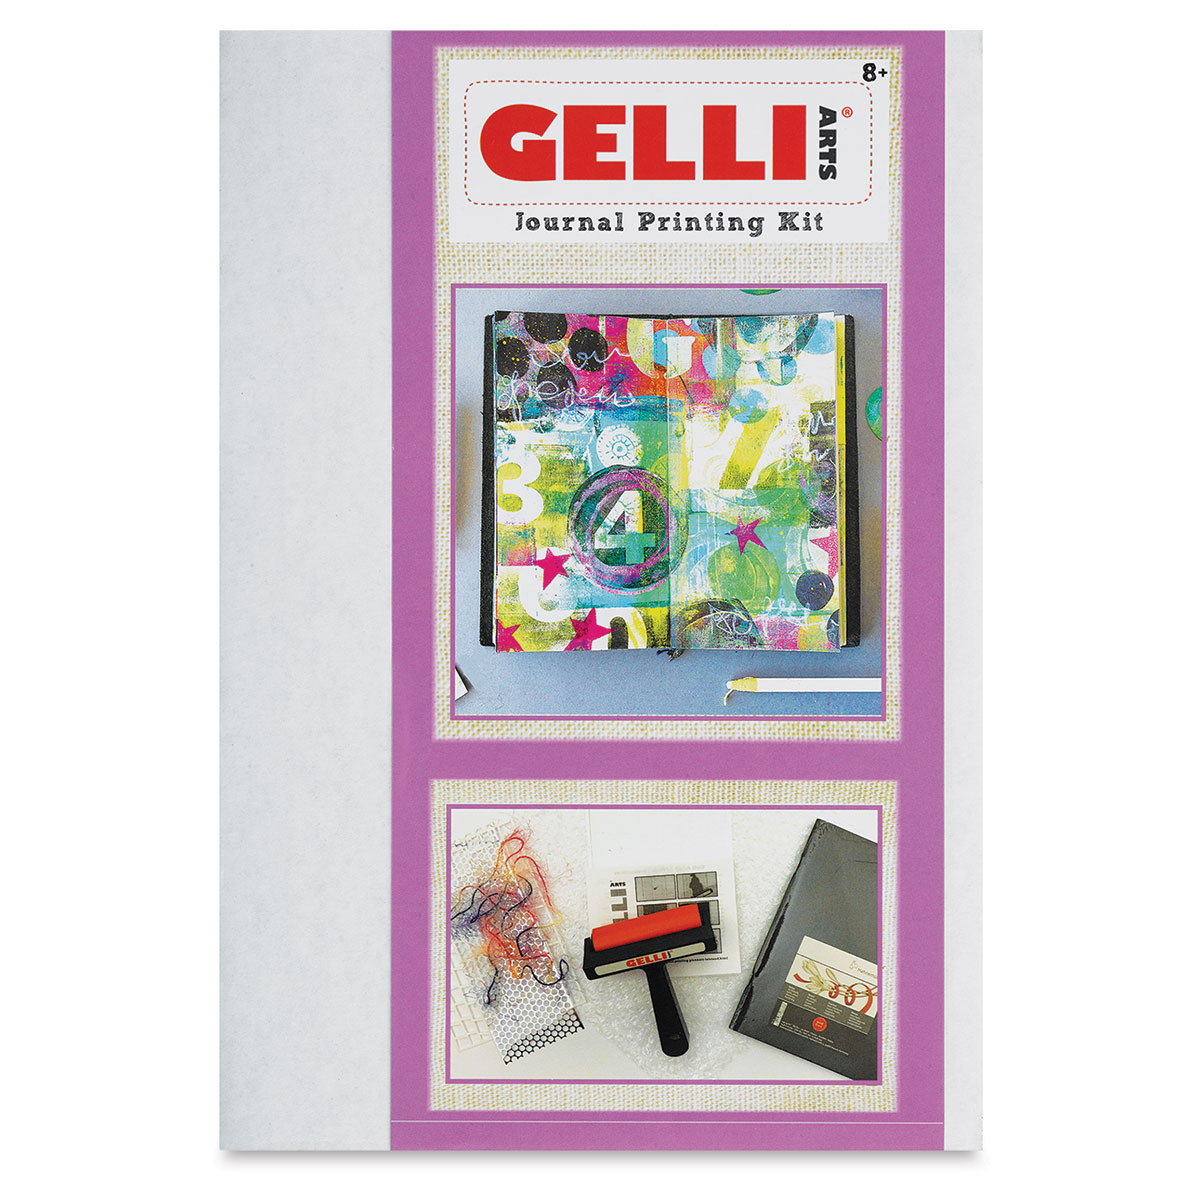 GELLI ARTS STAMPING AND PRINTING KIT - PRINTING AND EMBOSSING KIT